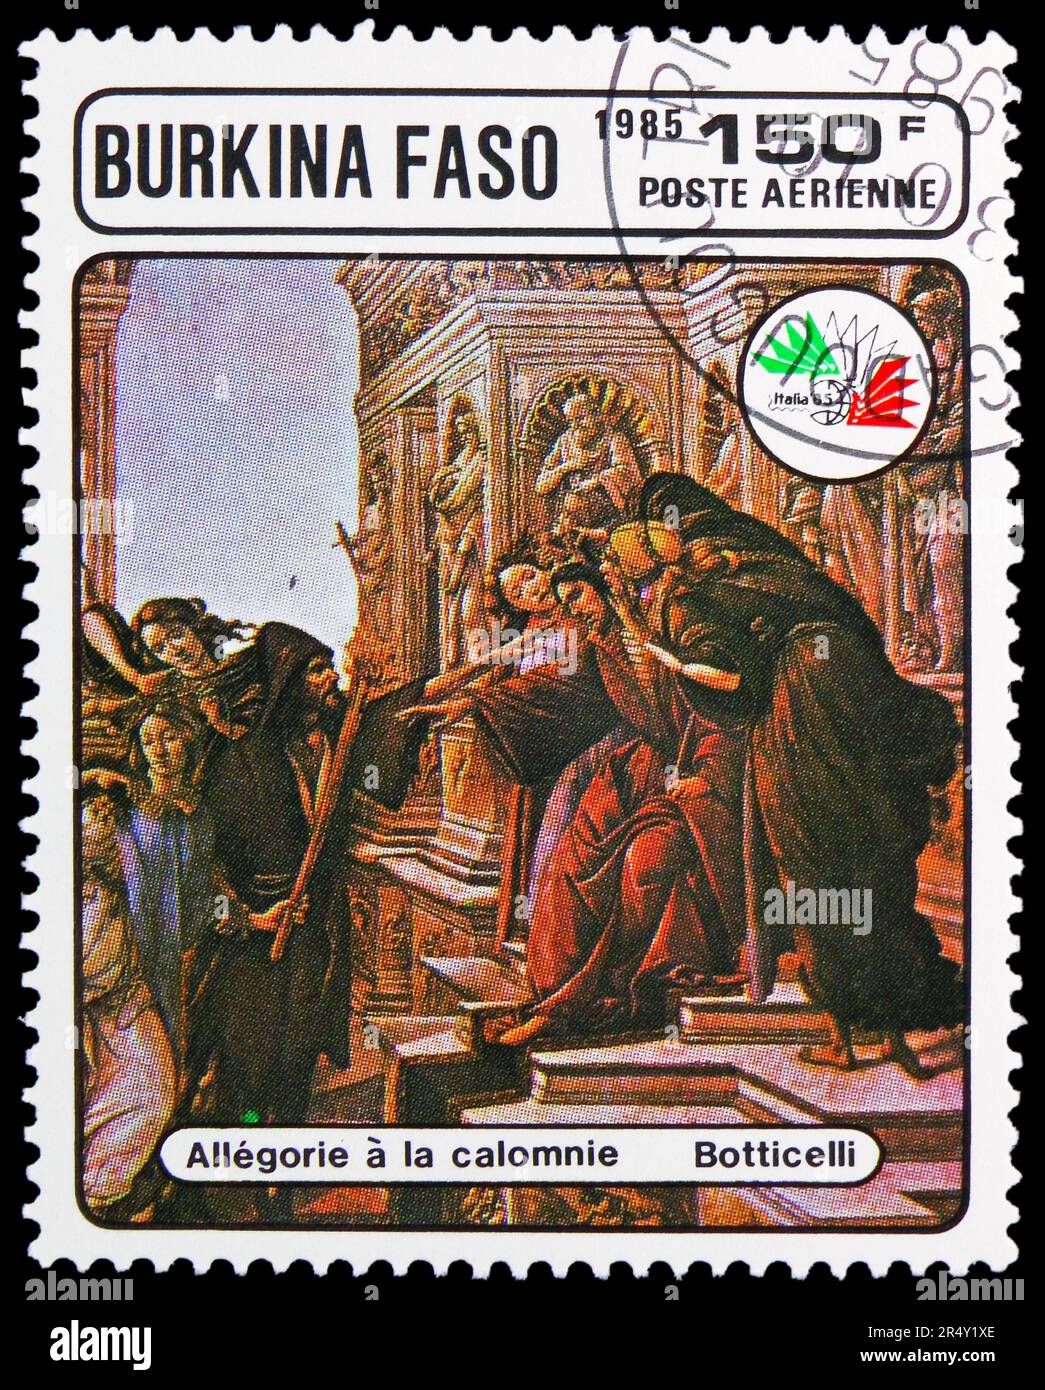 MOSCOU, RUSSIE - 18 MAI 2023: Timbre-poste imprimé au Burkina Faso montre Allegory of the Calumny, Timbres Exhibition ITALIA '85 série, vers 1985 Banque D'Images